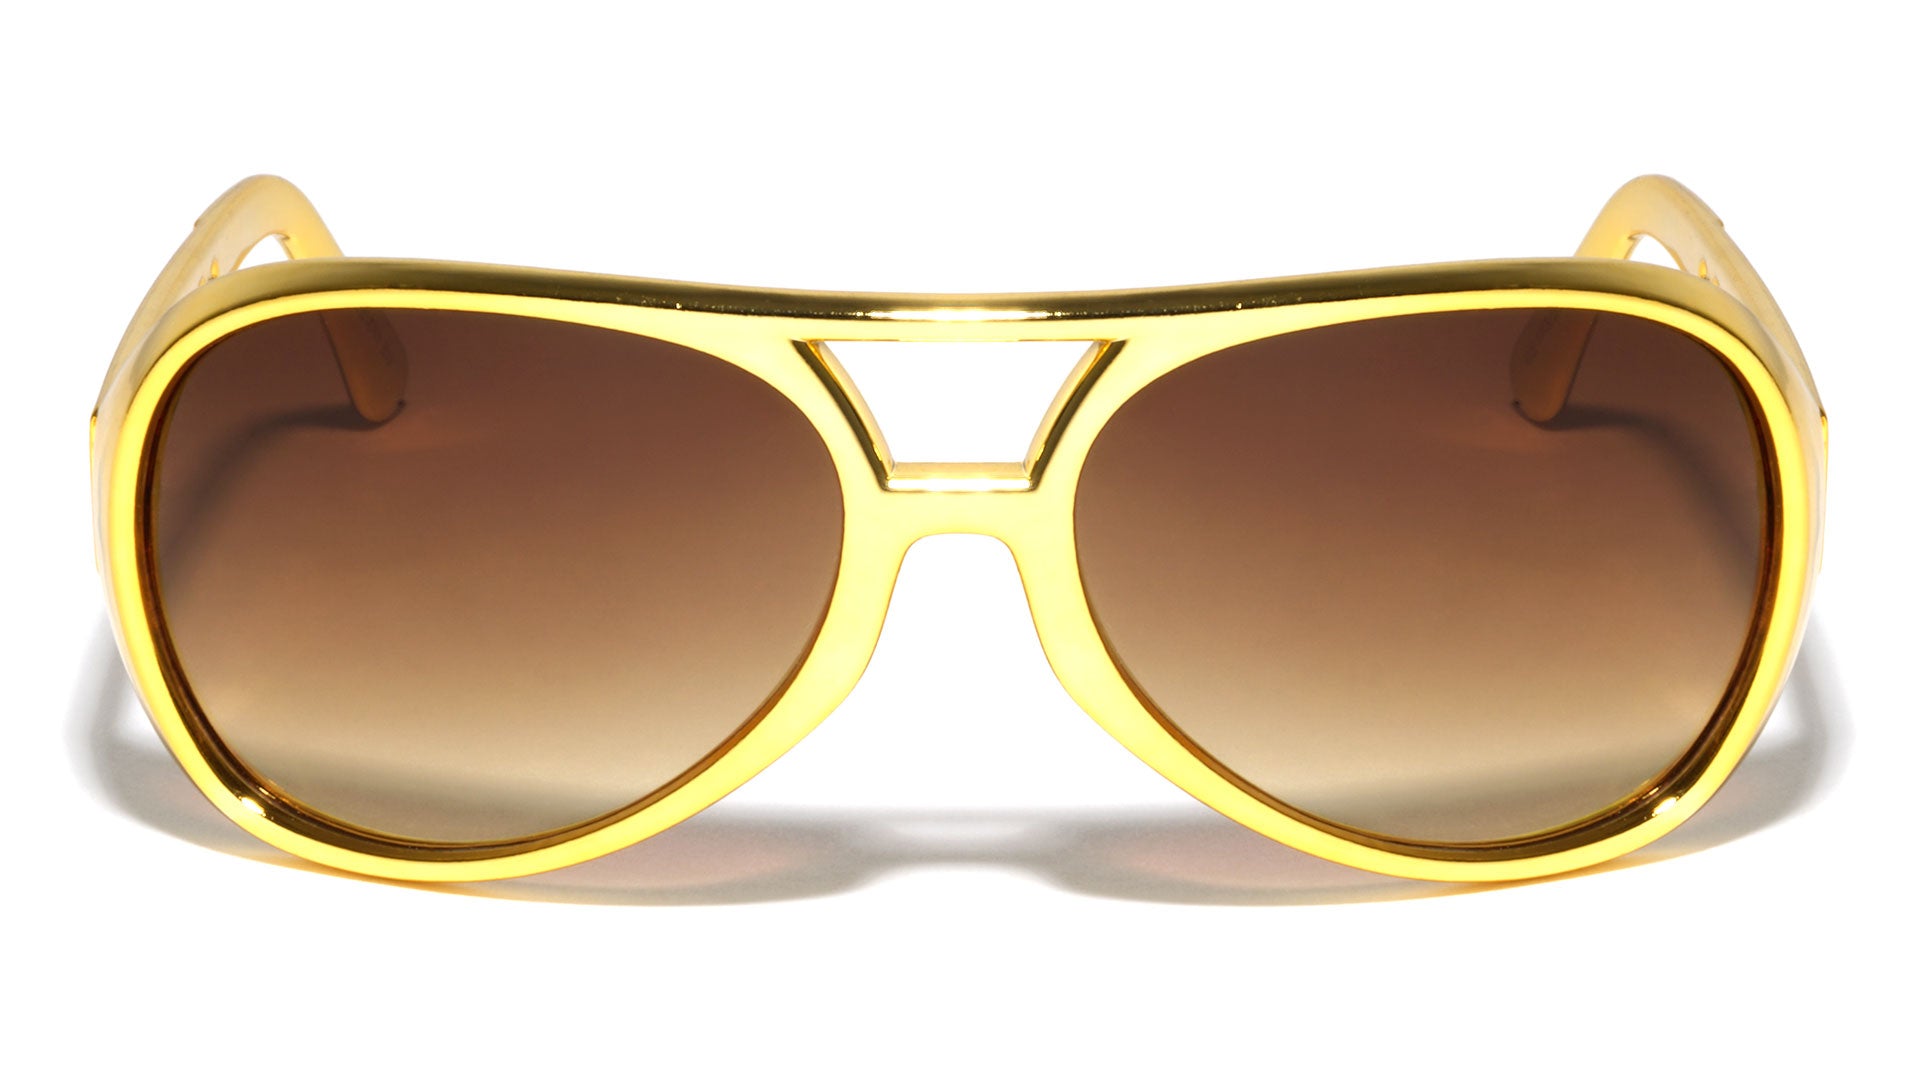 Bulk Novelty Sunglasses for Adults